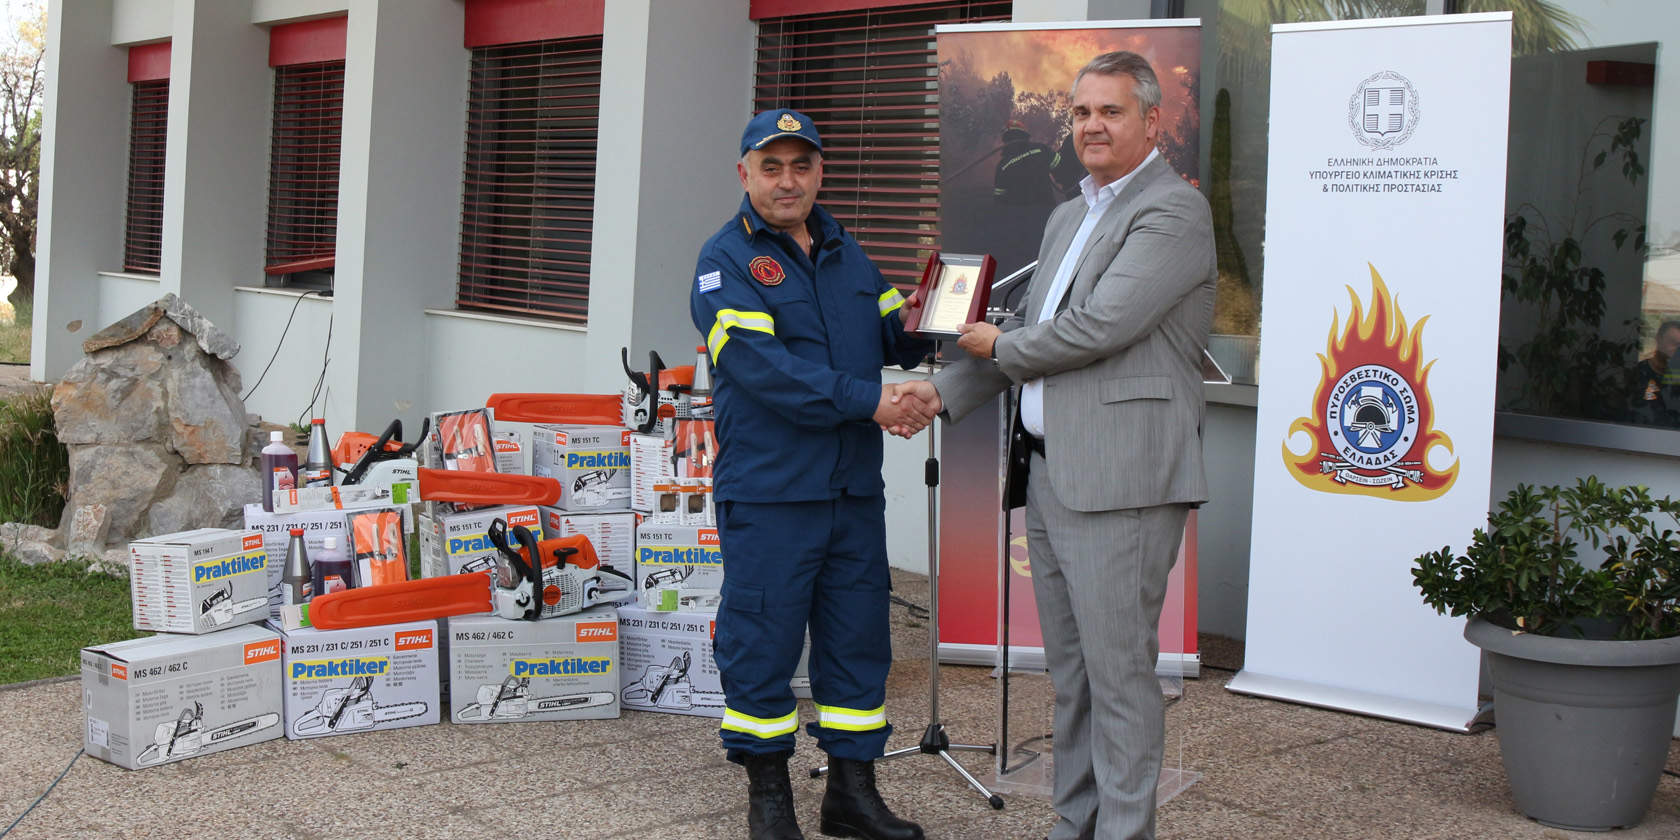 o κ. Ραβάνης, διευθύνων σύμβουλος της STIHL Ελλάδος απονέμεται με βραβείο συνεισφοράς από τον αρχηγό της πυροσβεστικής